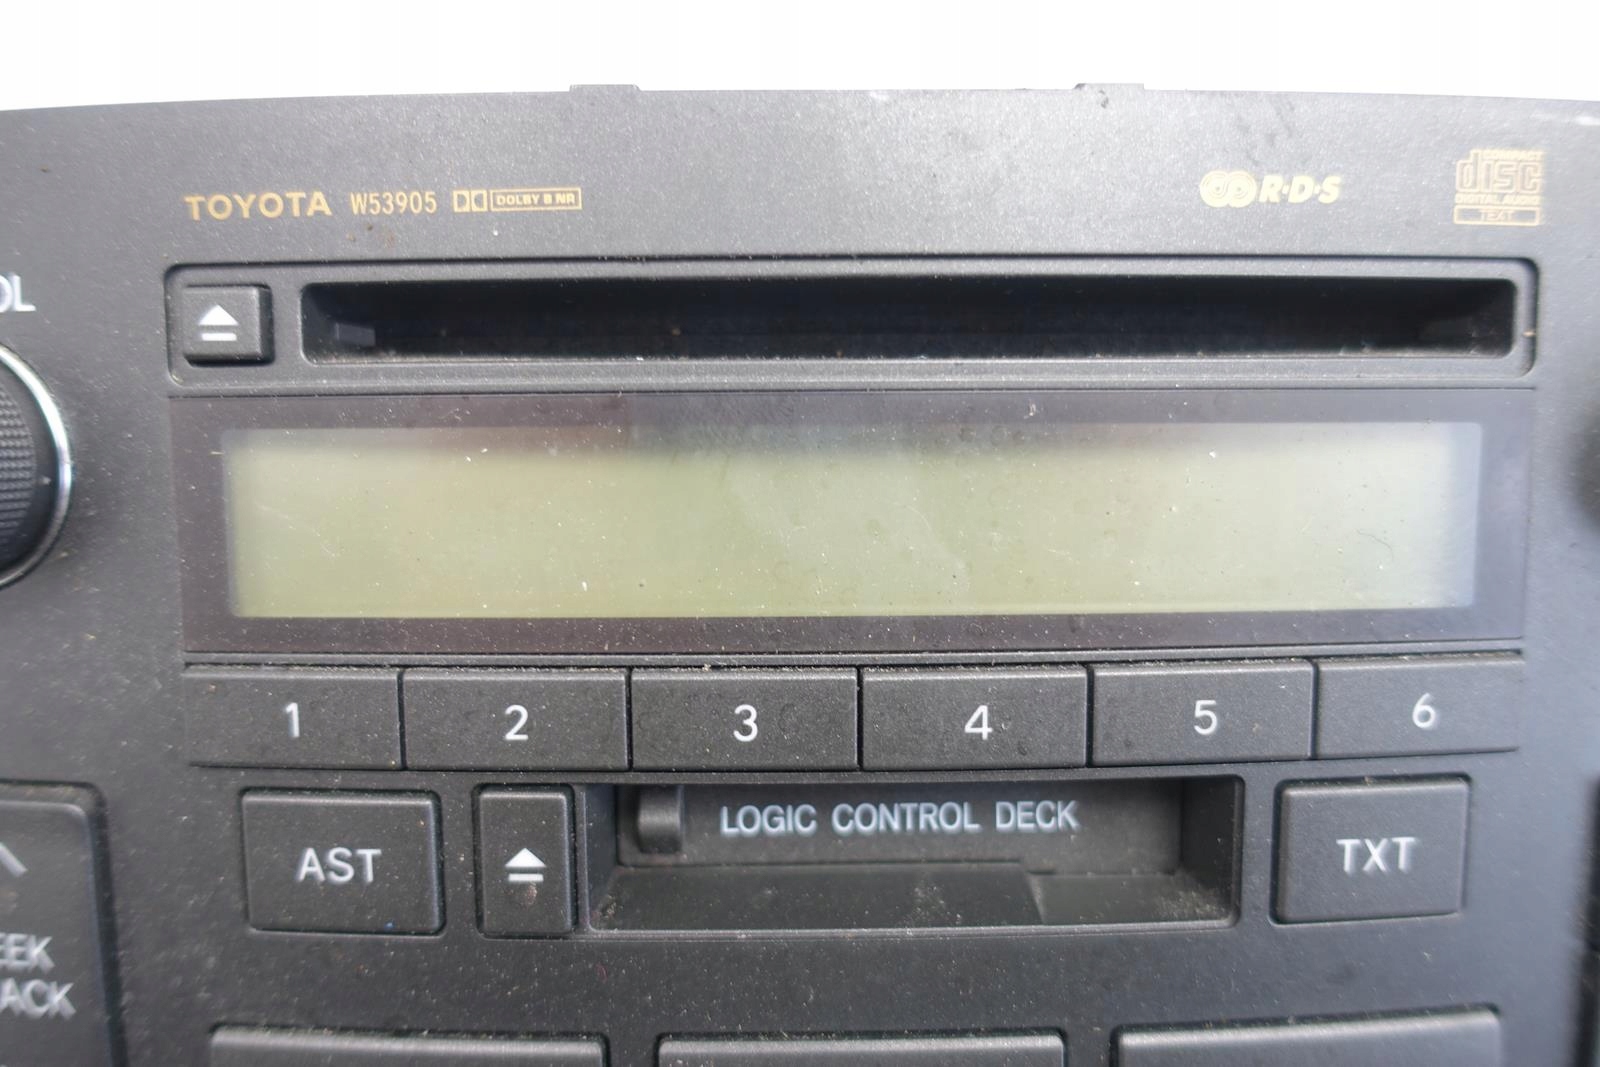 Avensis II T25 RADIOOTWARZACZ CD 86120-05071 Panel